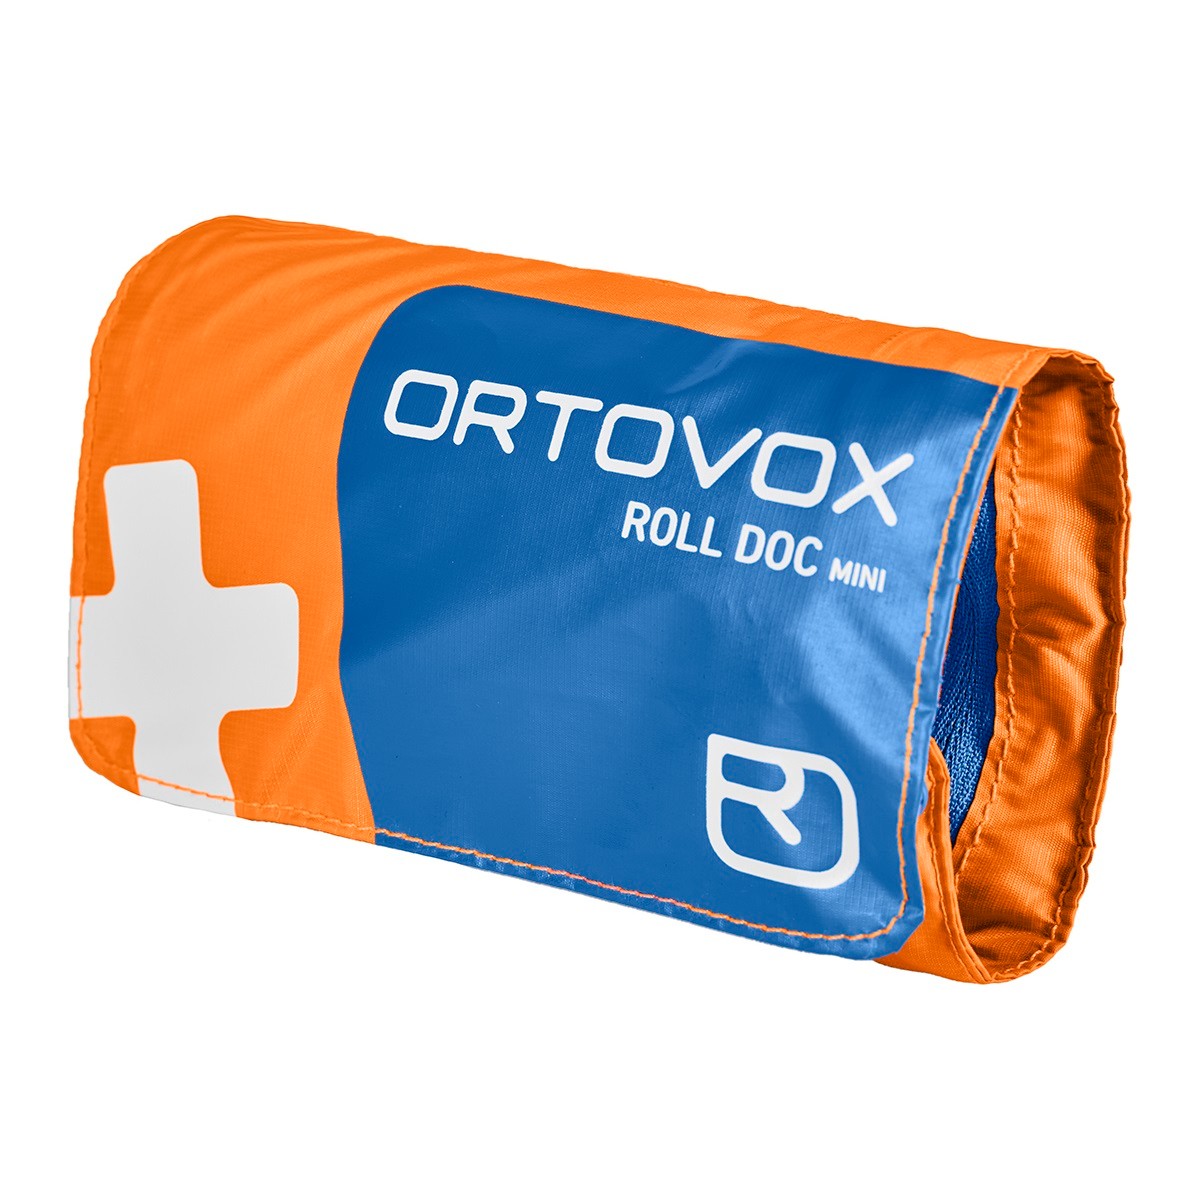 First Aid Roll Doc Mini shocking orange